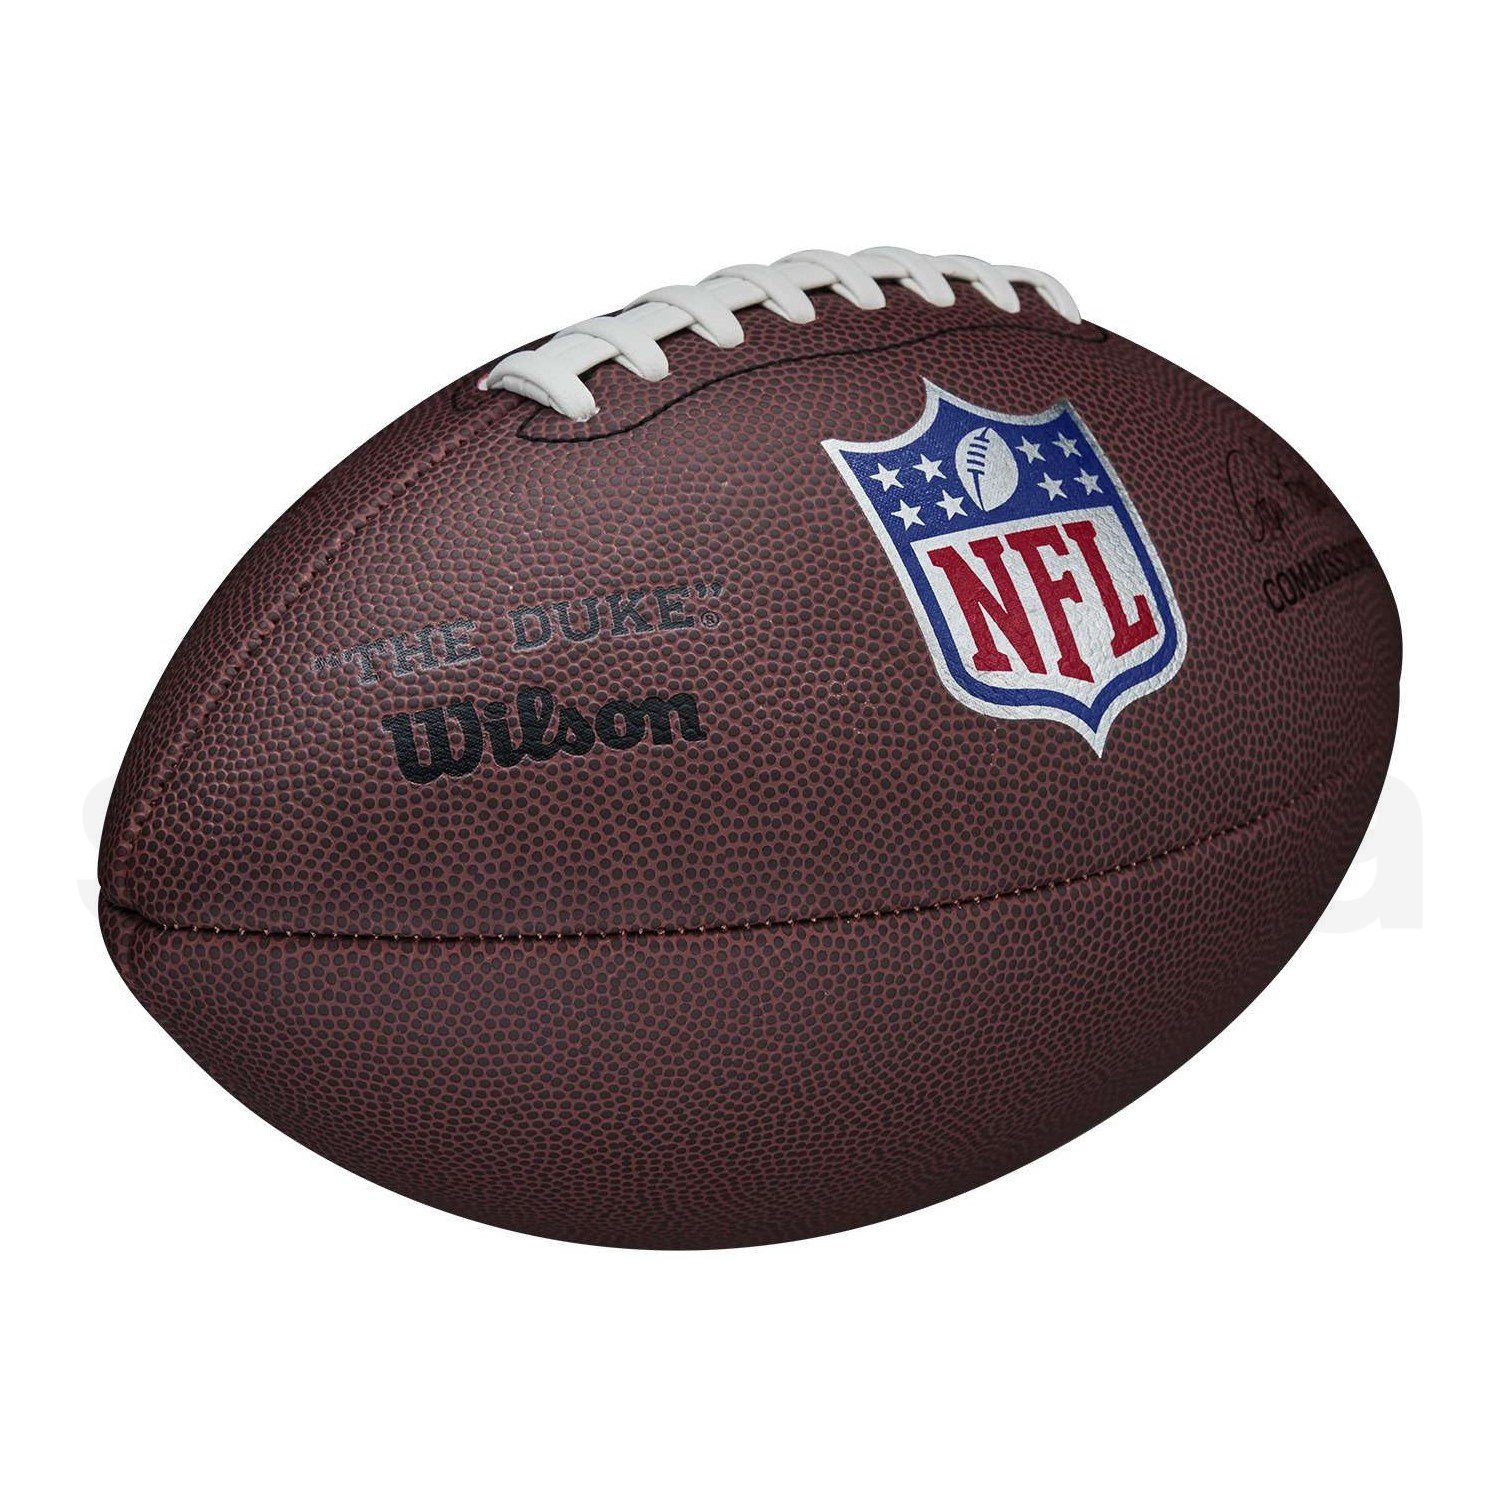 Míč Wilson NFL Duke Replica Fb Def - hnědá